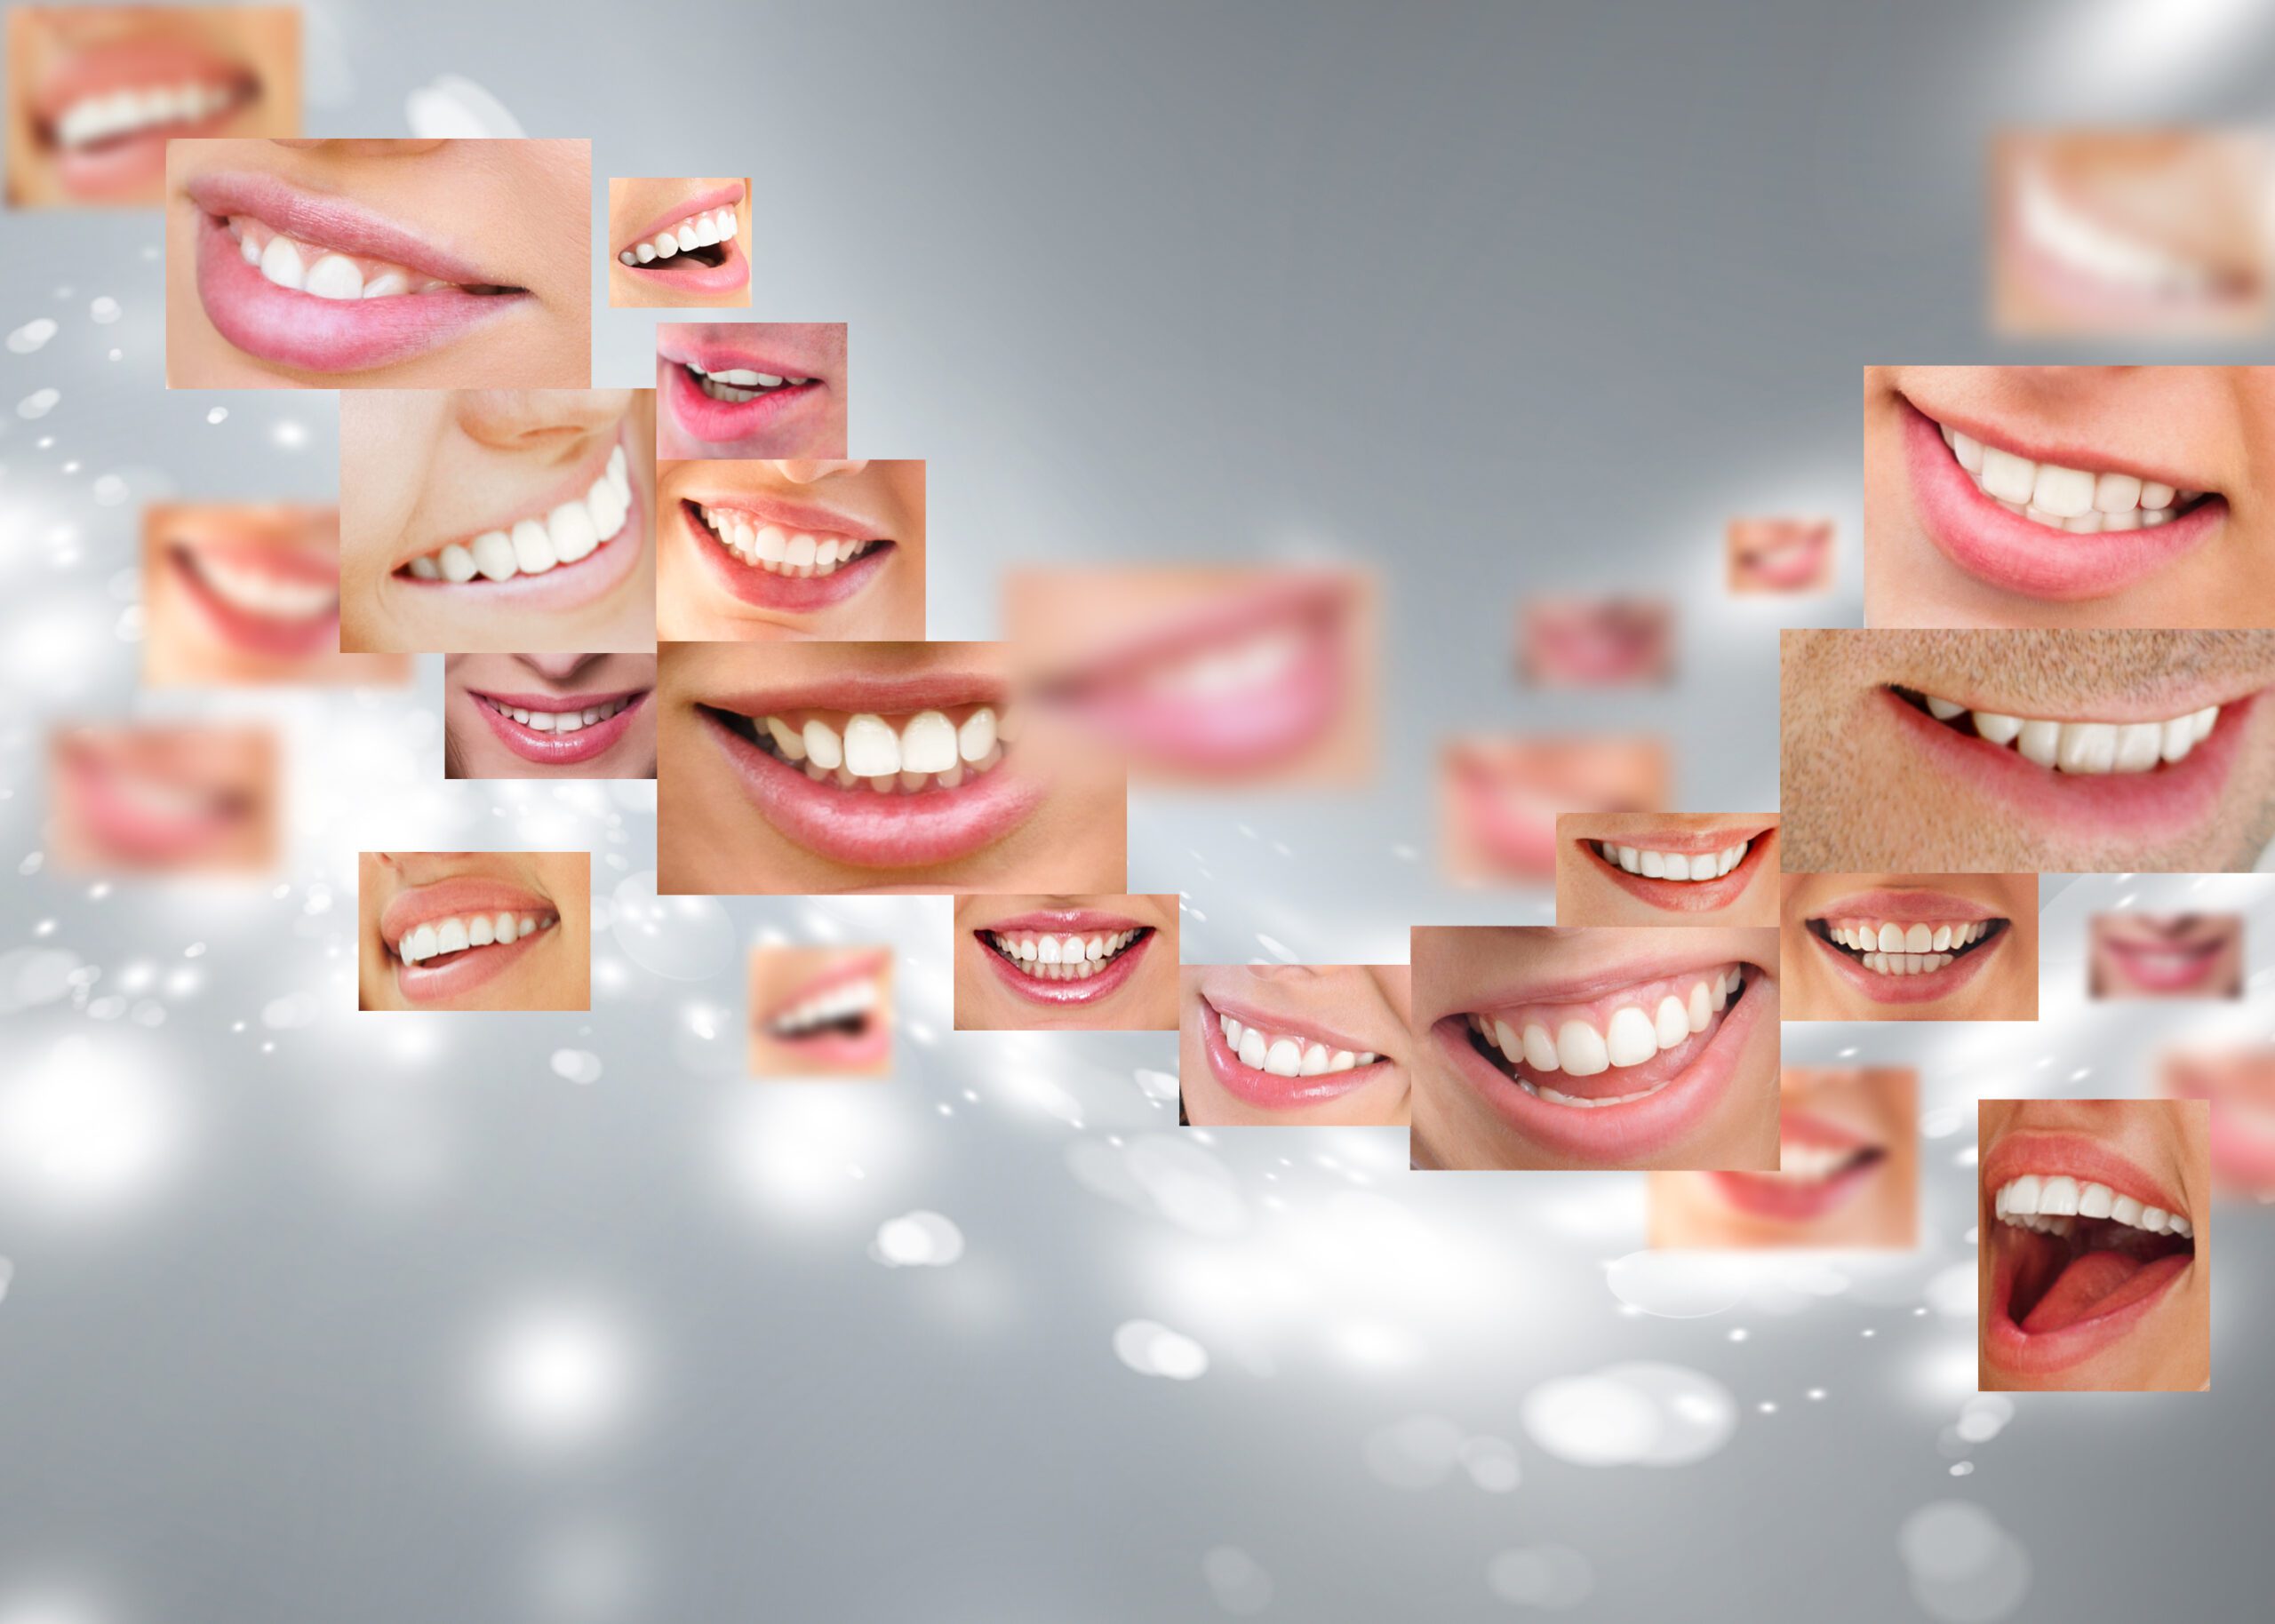 Faces of smiling people in set. Healthy teeth. Smile